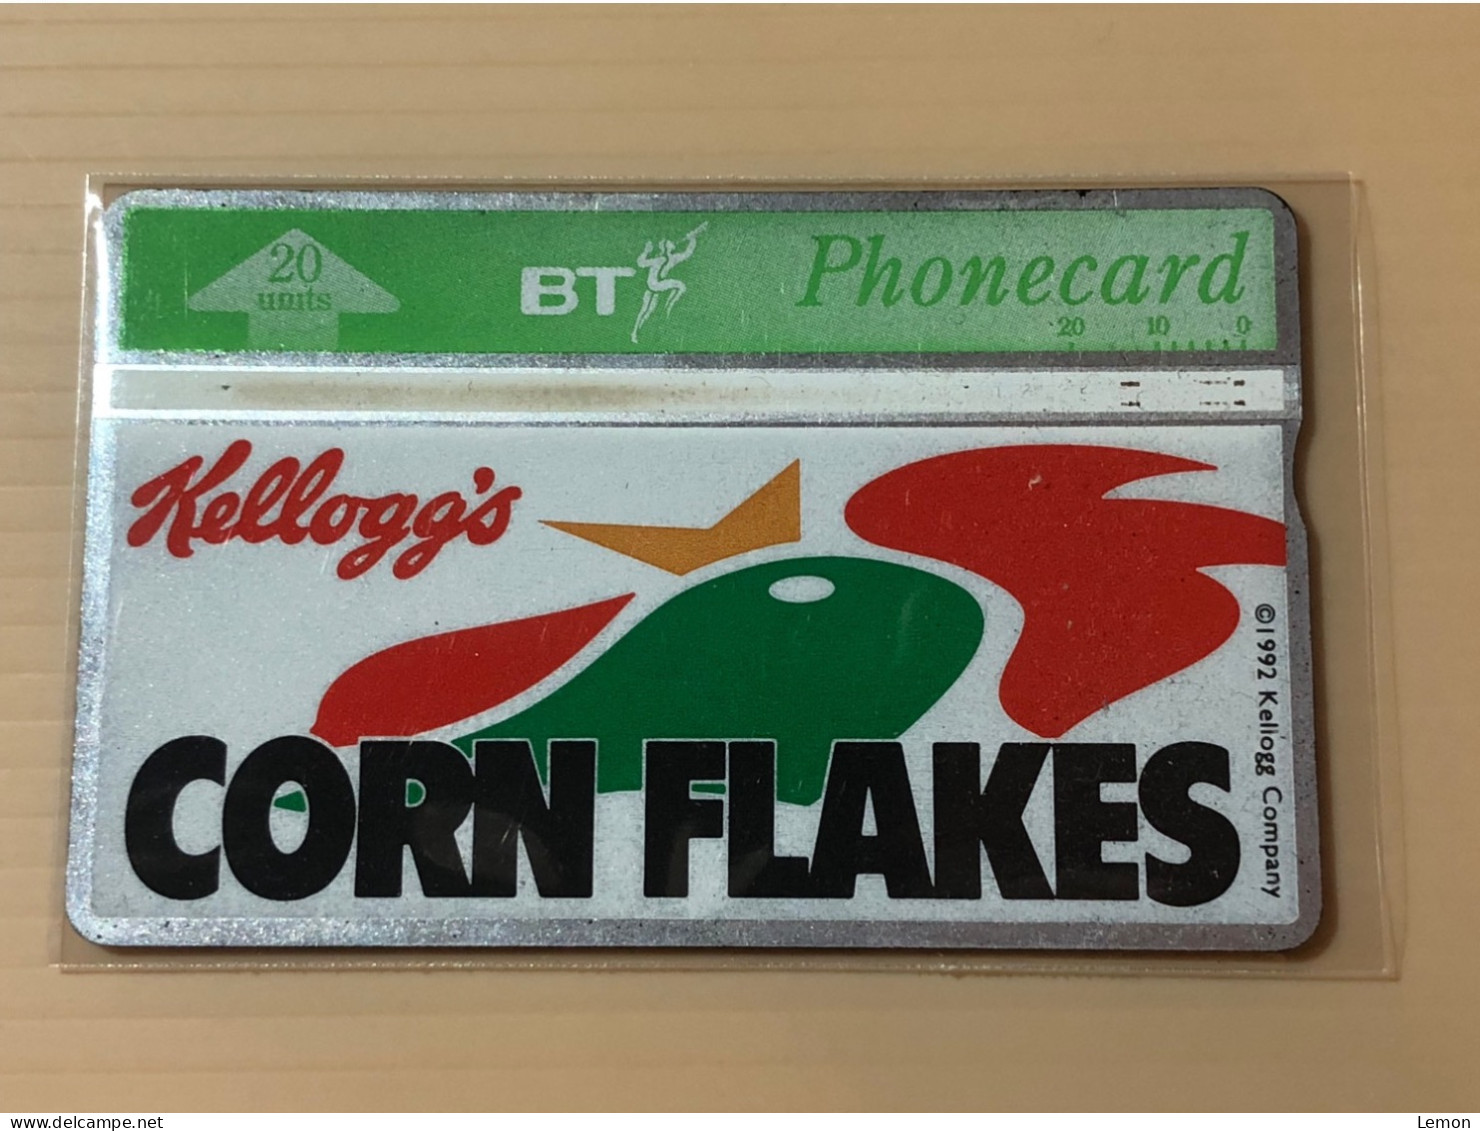 UK United Kingdom - British Telecom Phonecard - Kellogg’s Cornflakes - Set Of 1 Used Card - Sammlungen